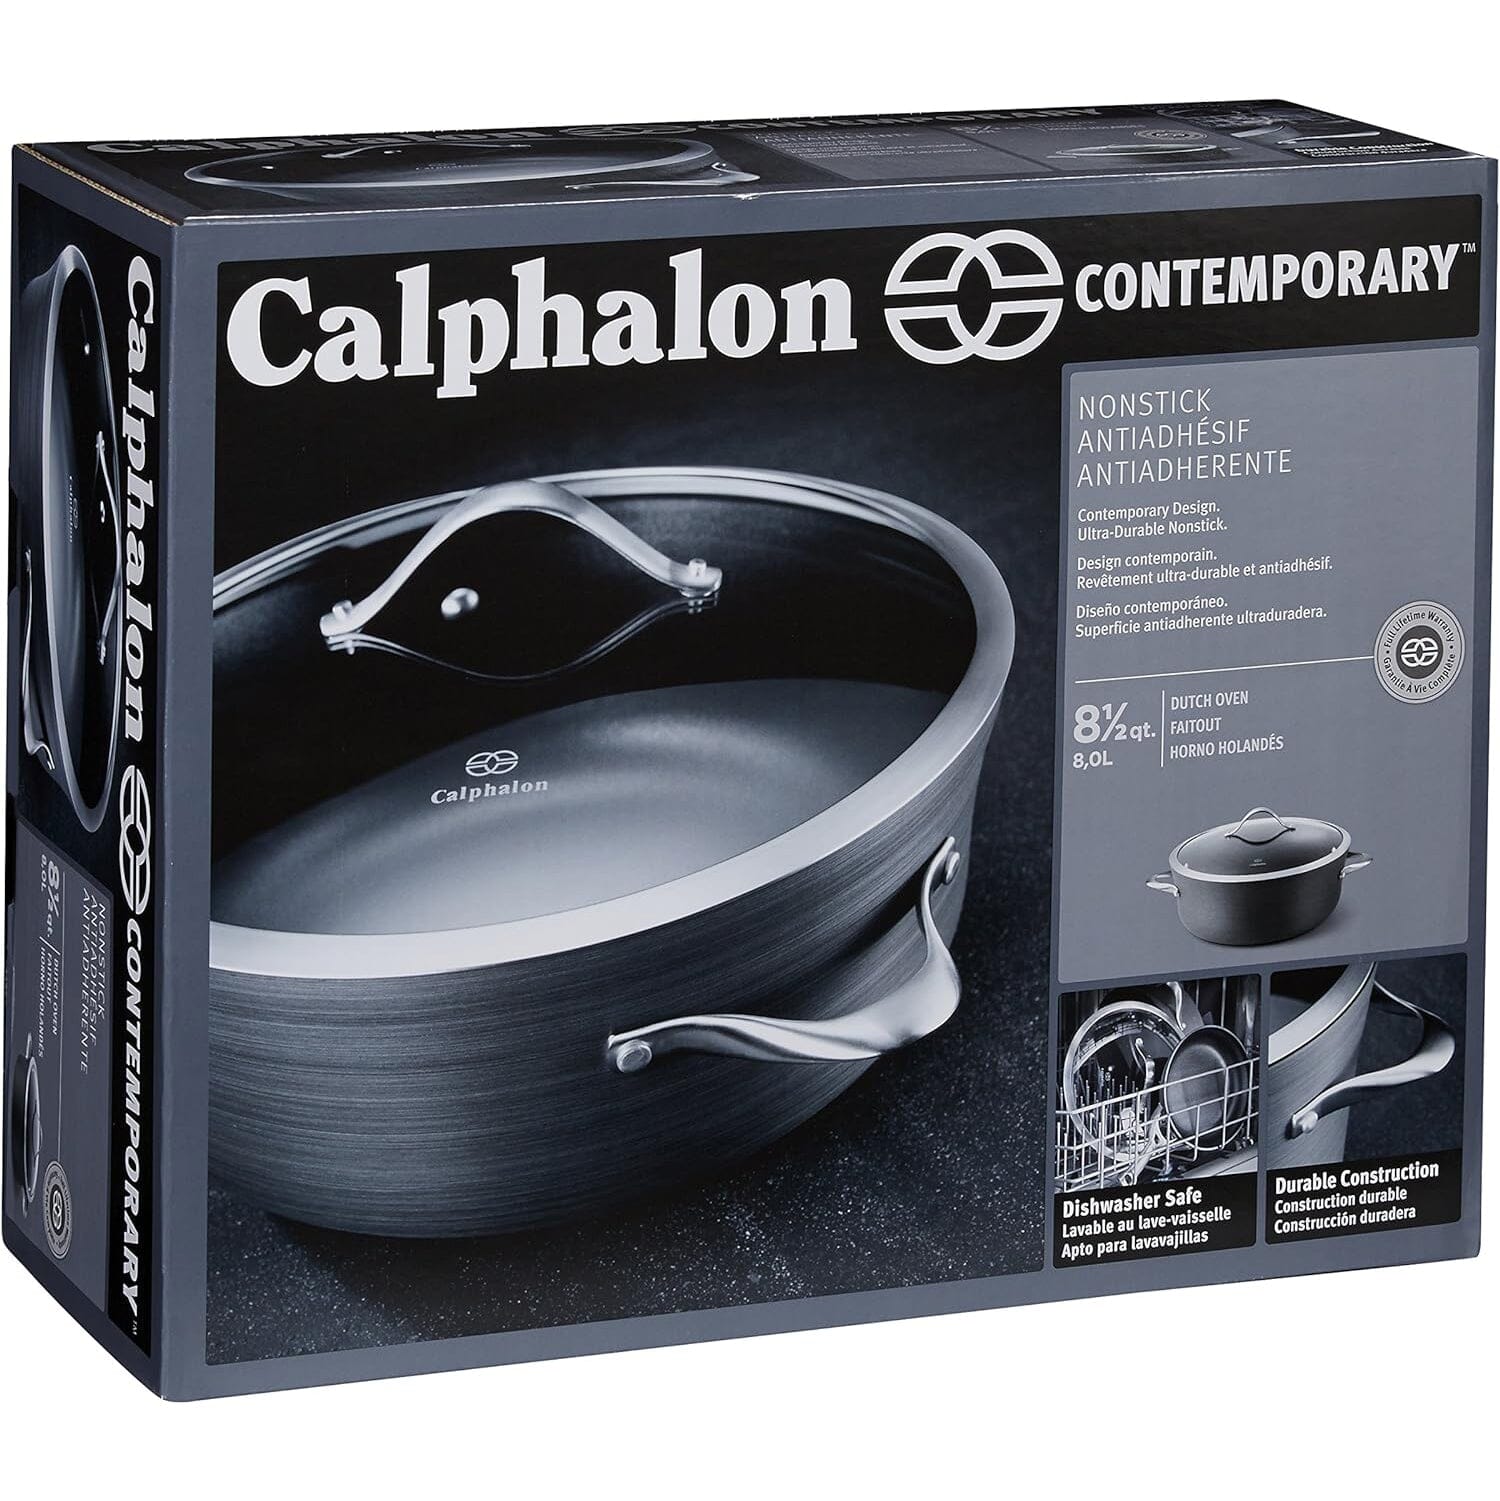 Calphalon Contemporary Nonstick 8 Qt. Stock Pot with Cover